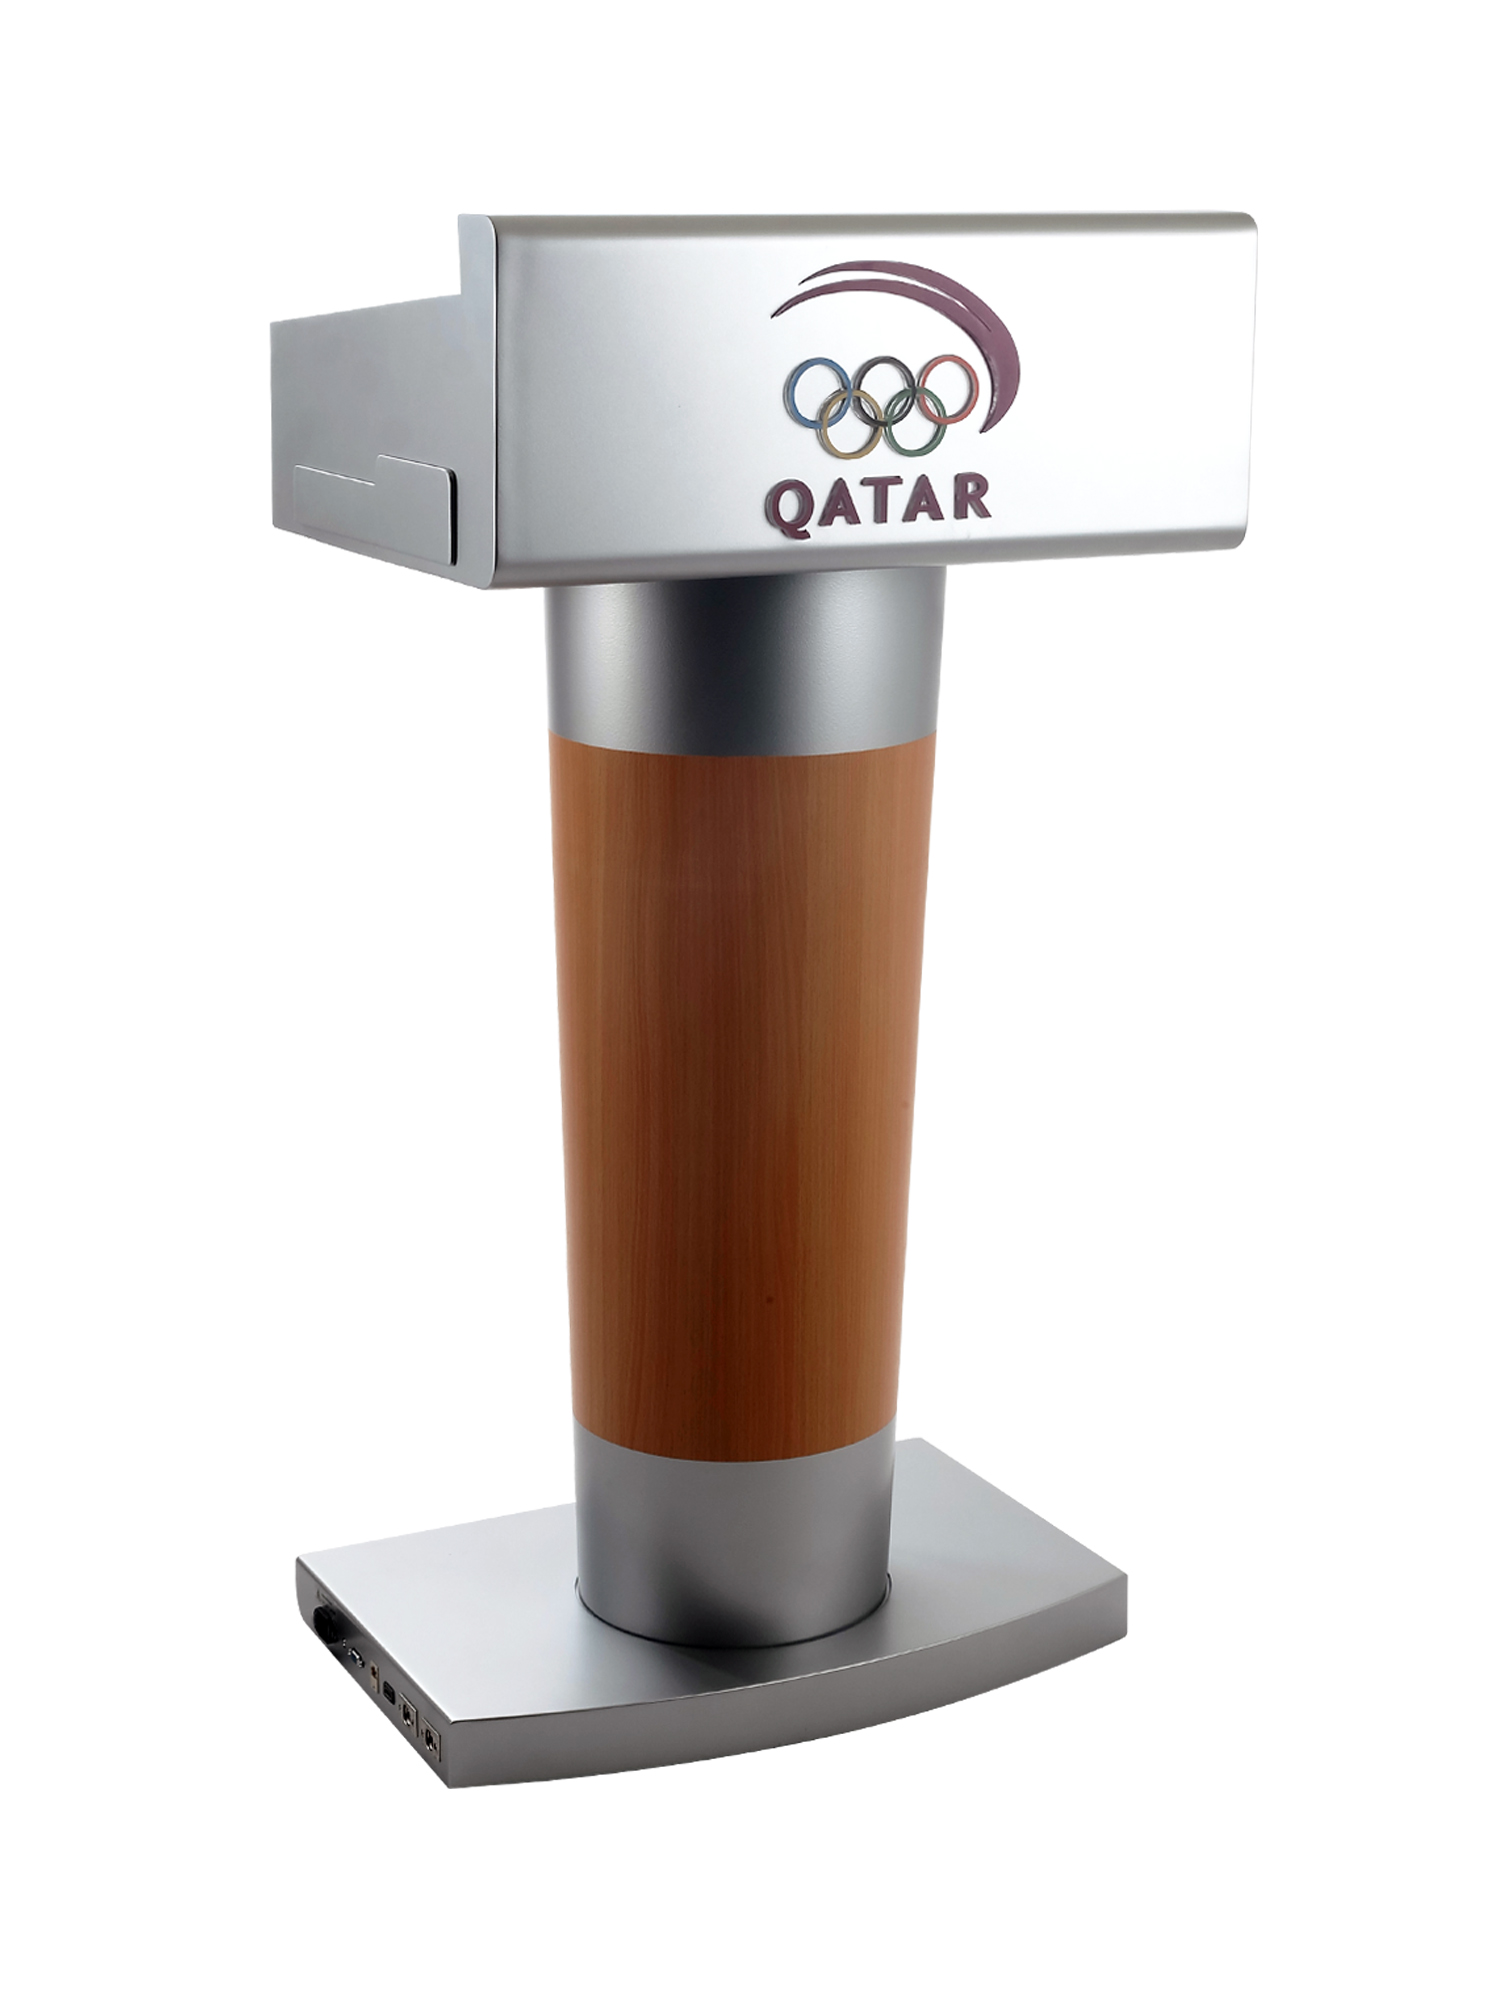 Qatar Olympics Committee